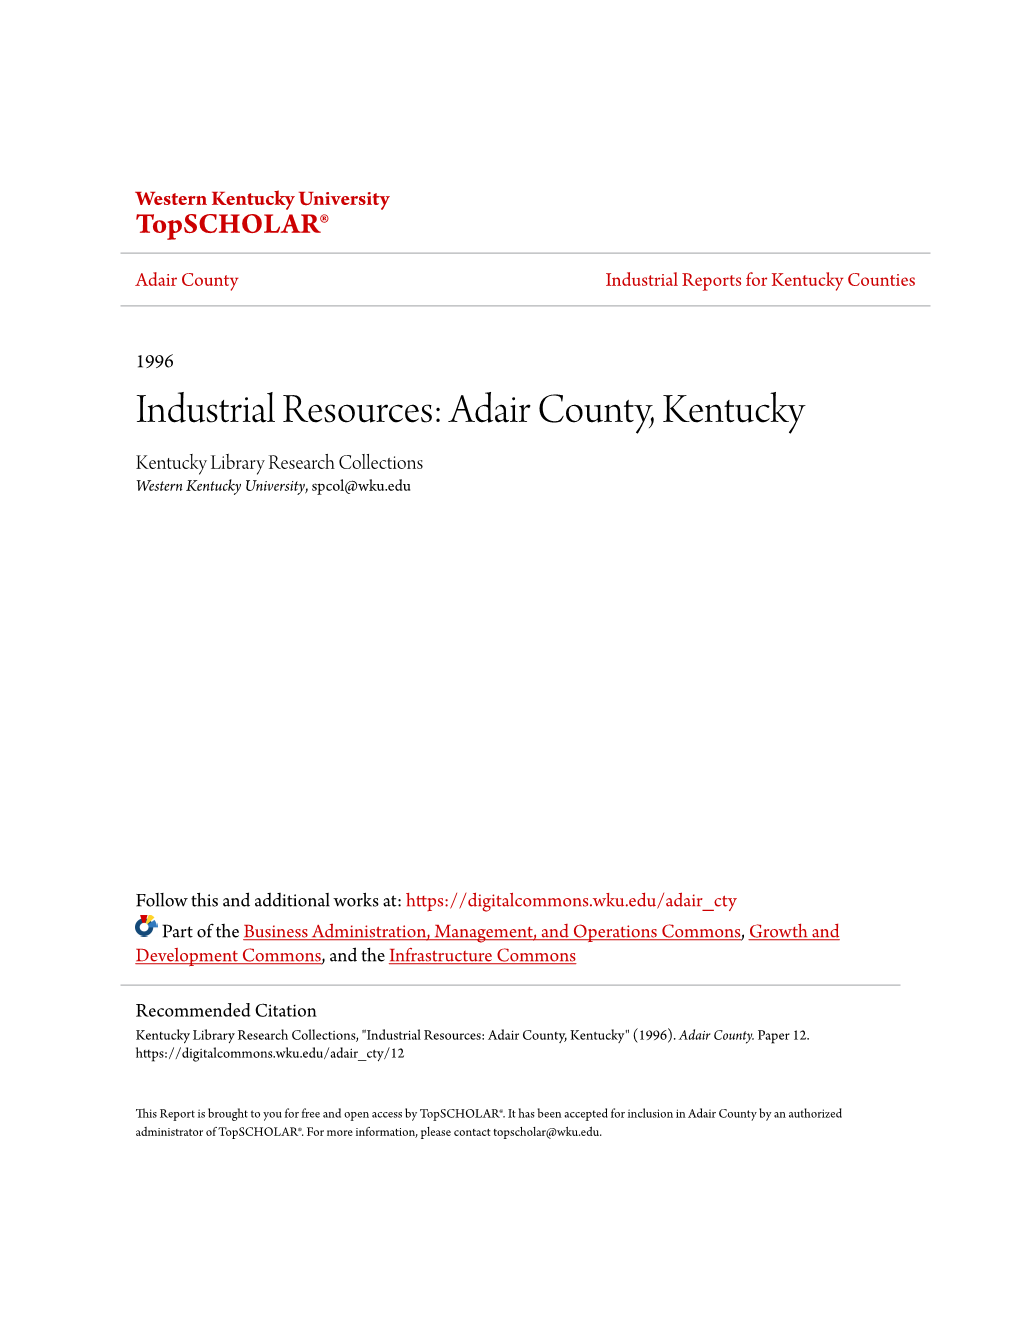 Adair County, Kentucky Kentucky Library Research Collections Western Kentucky University, Spcol@Wku.Edu